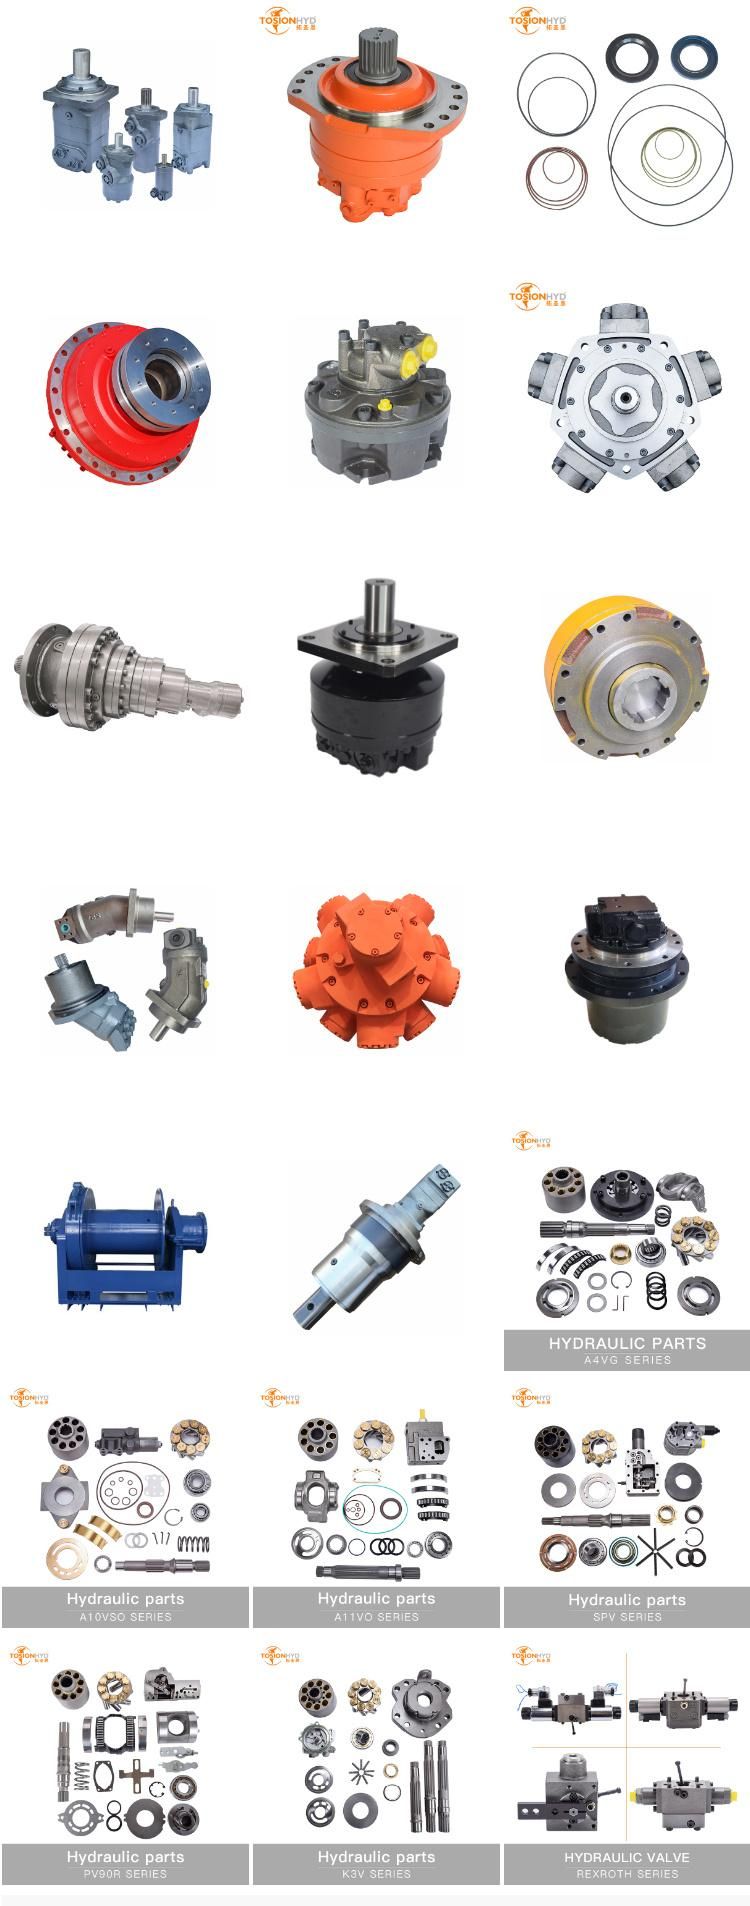 A7V 225 Hydraulic Pump Parts with Rexroth Spare Repair Kits